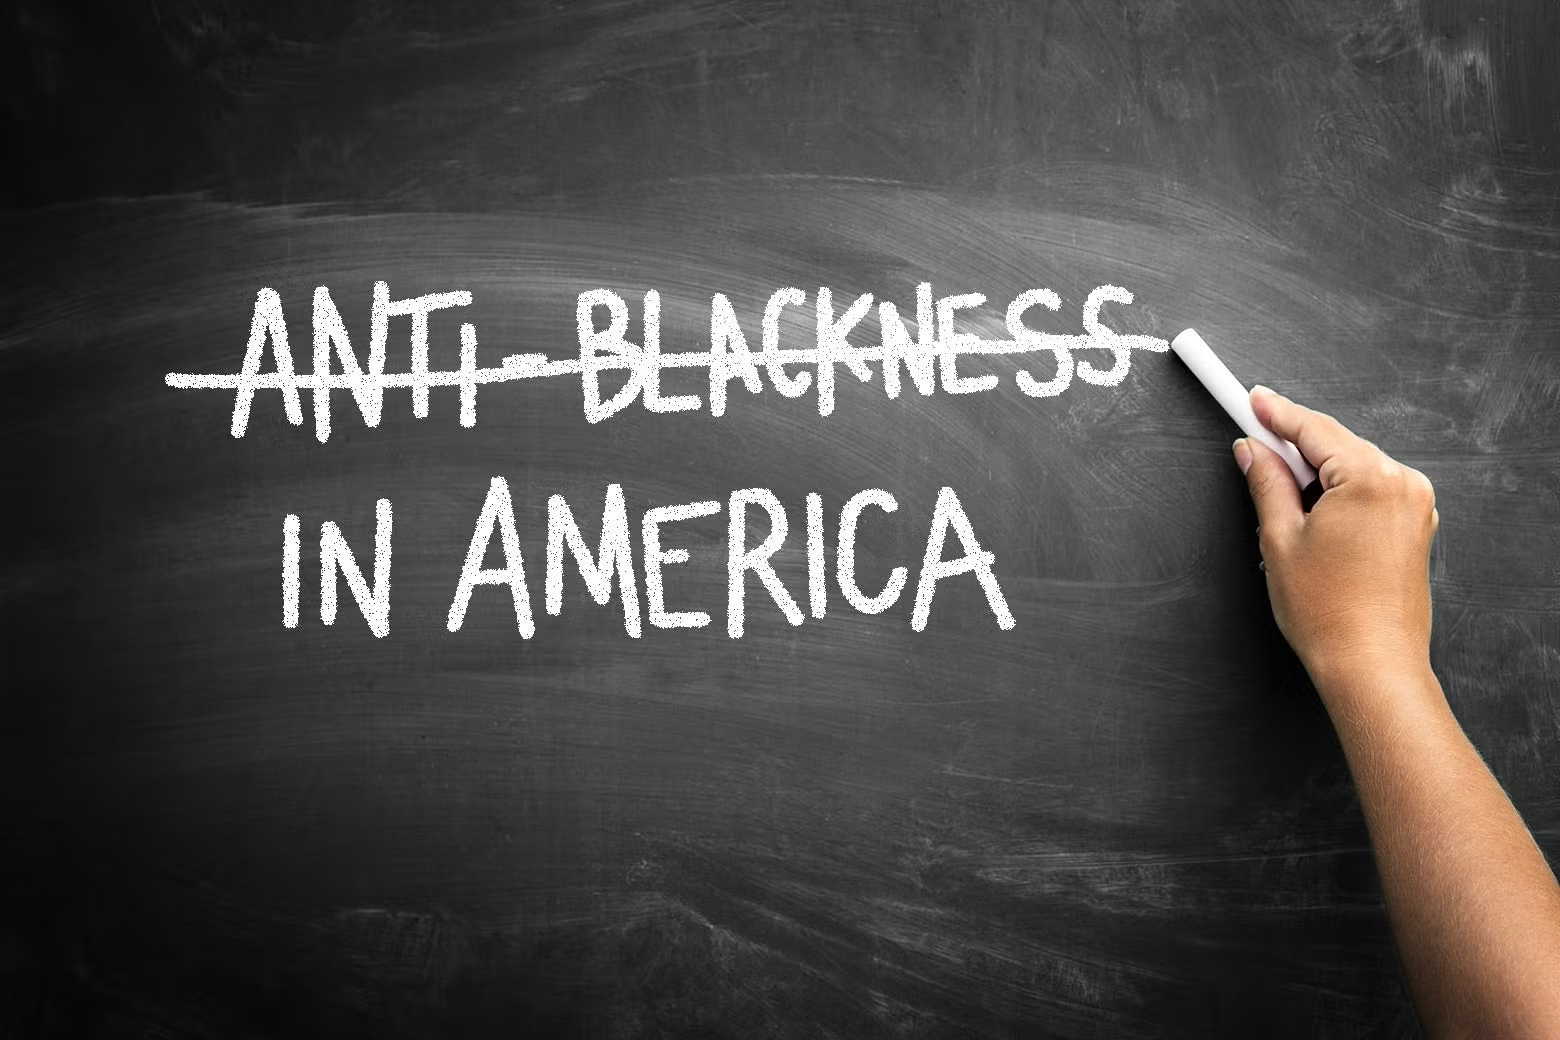 White America's Secret Rewards For Puching Down Black